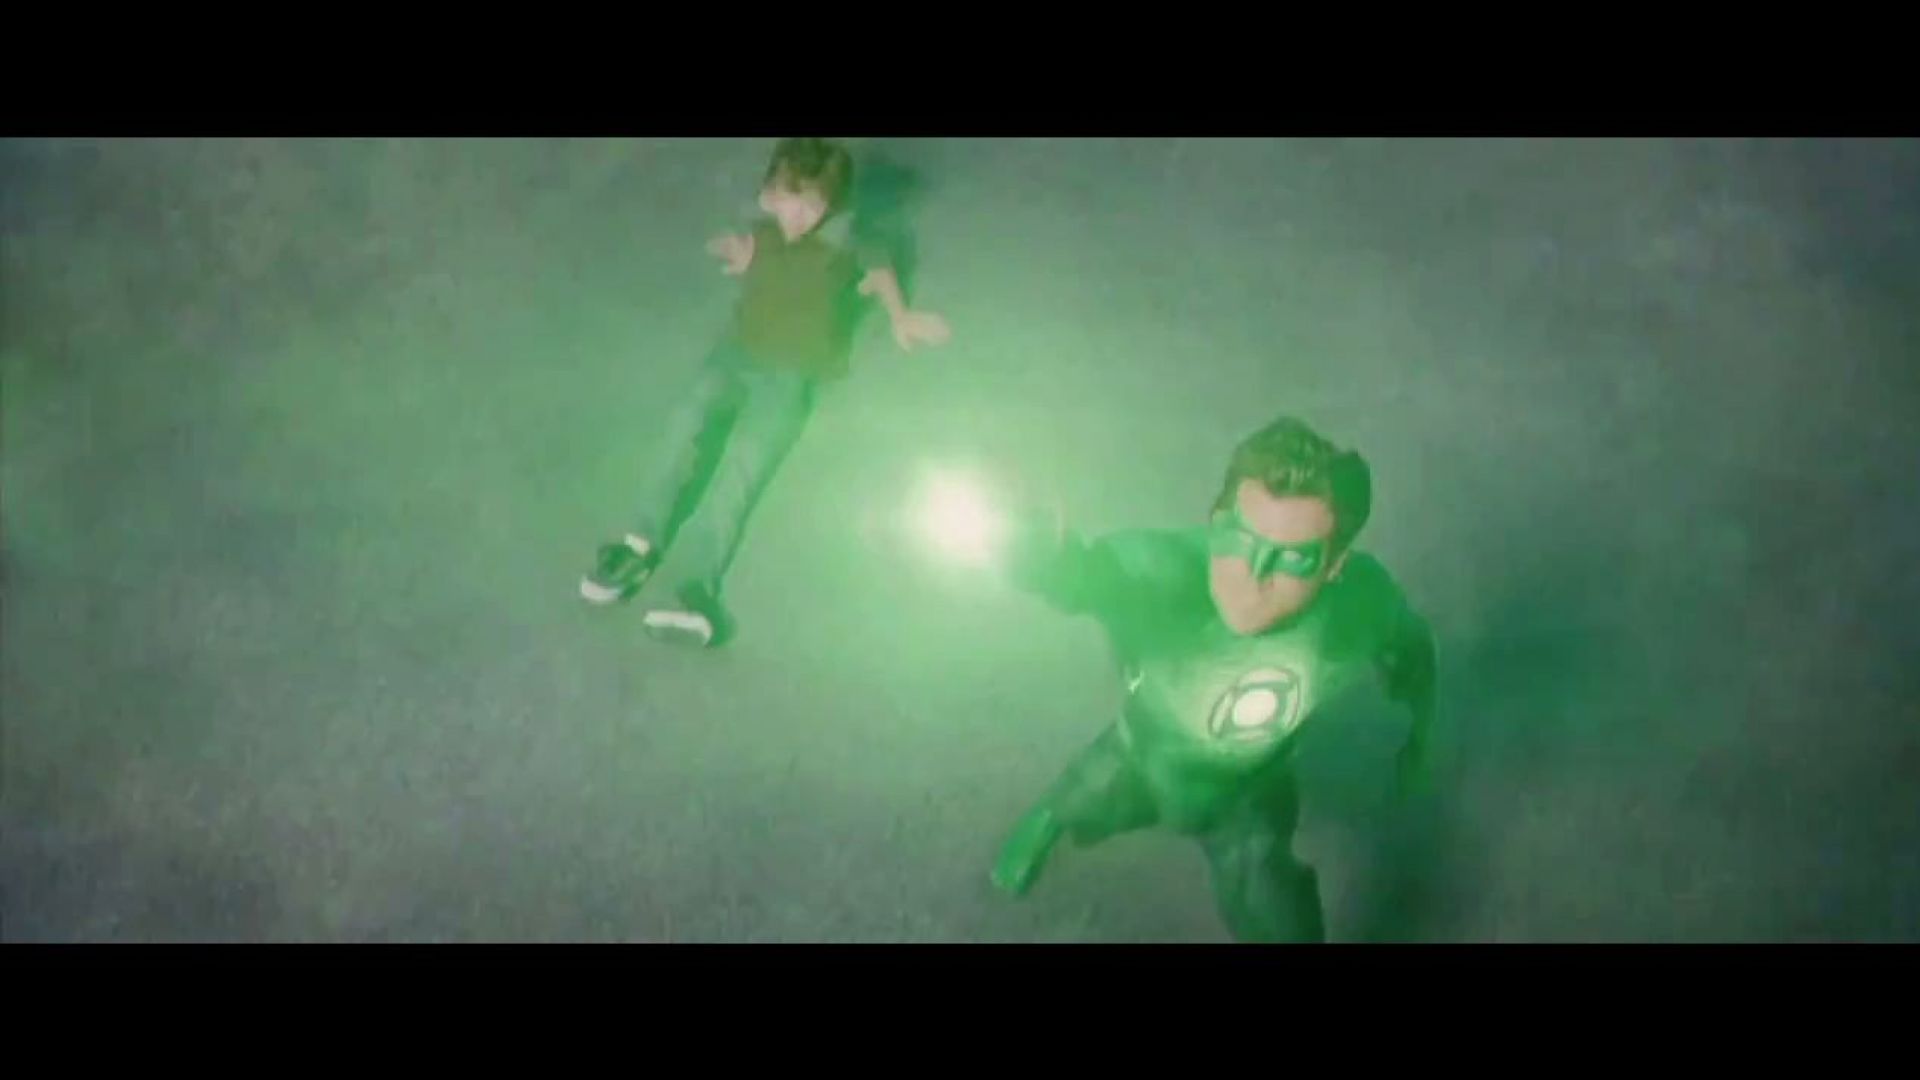 The ring chose you, Green Lantern